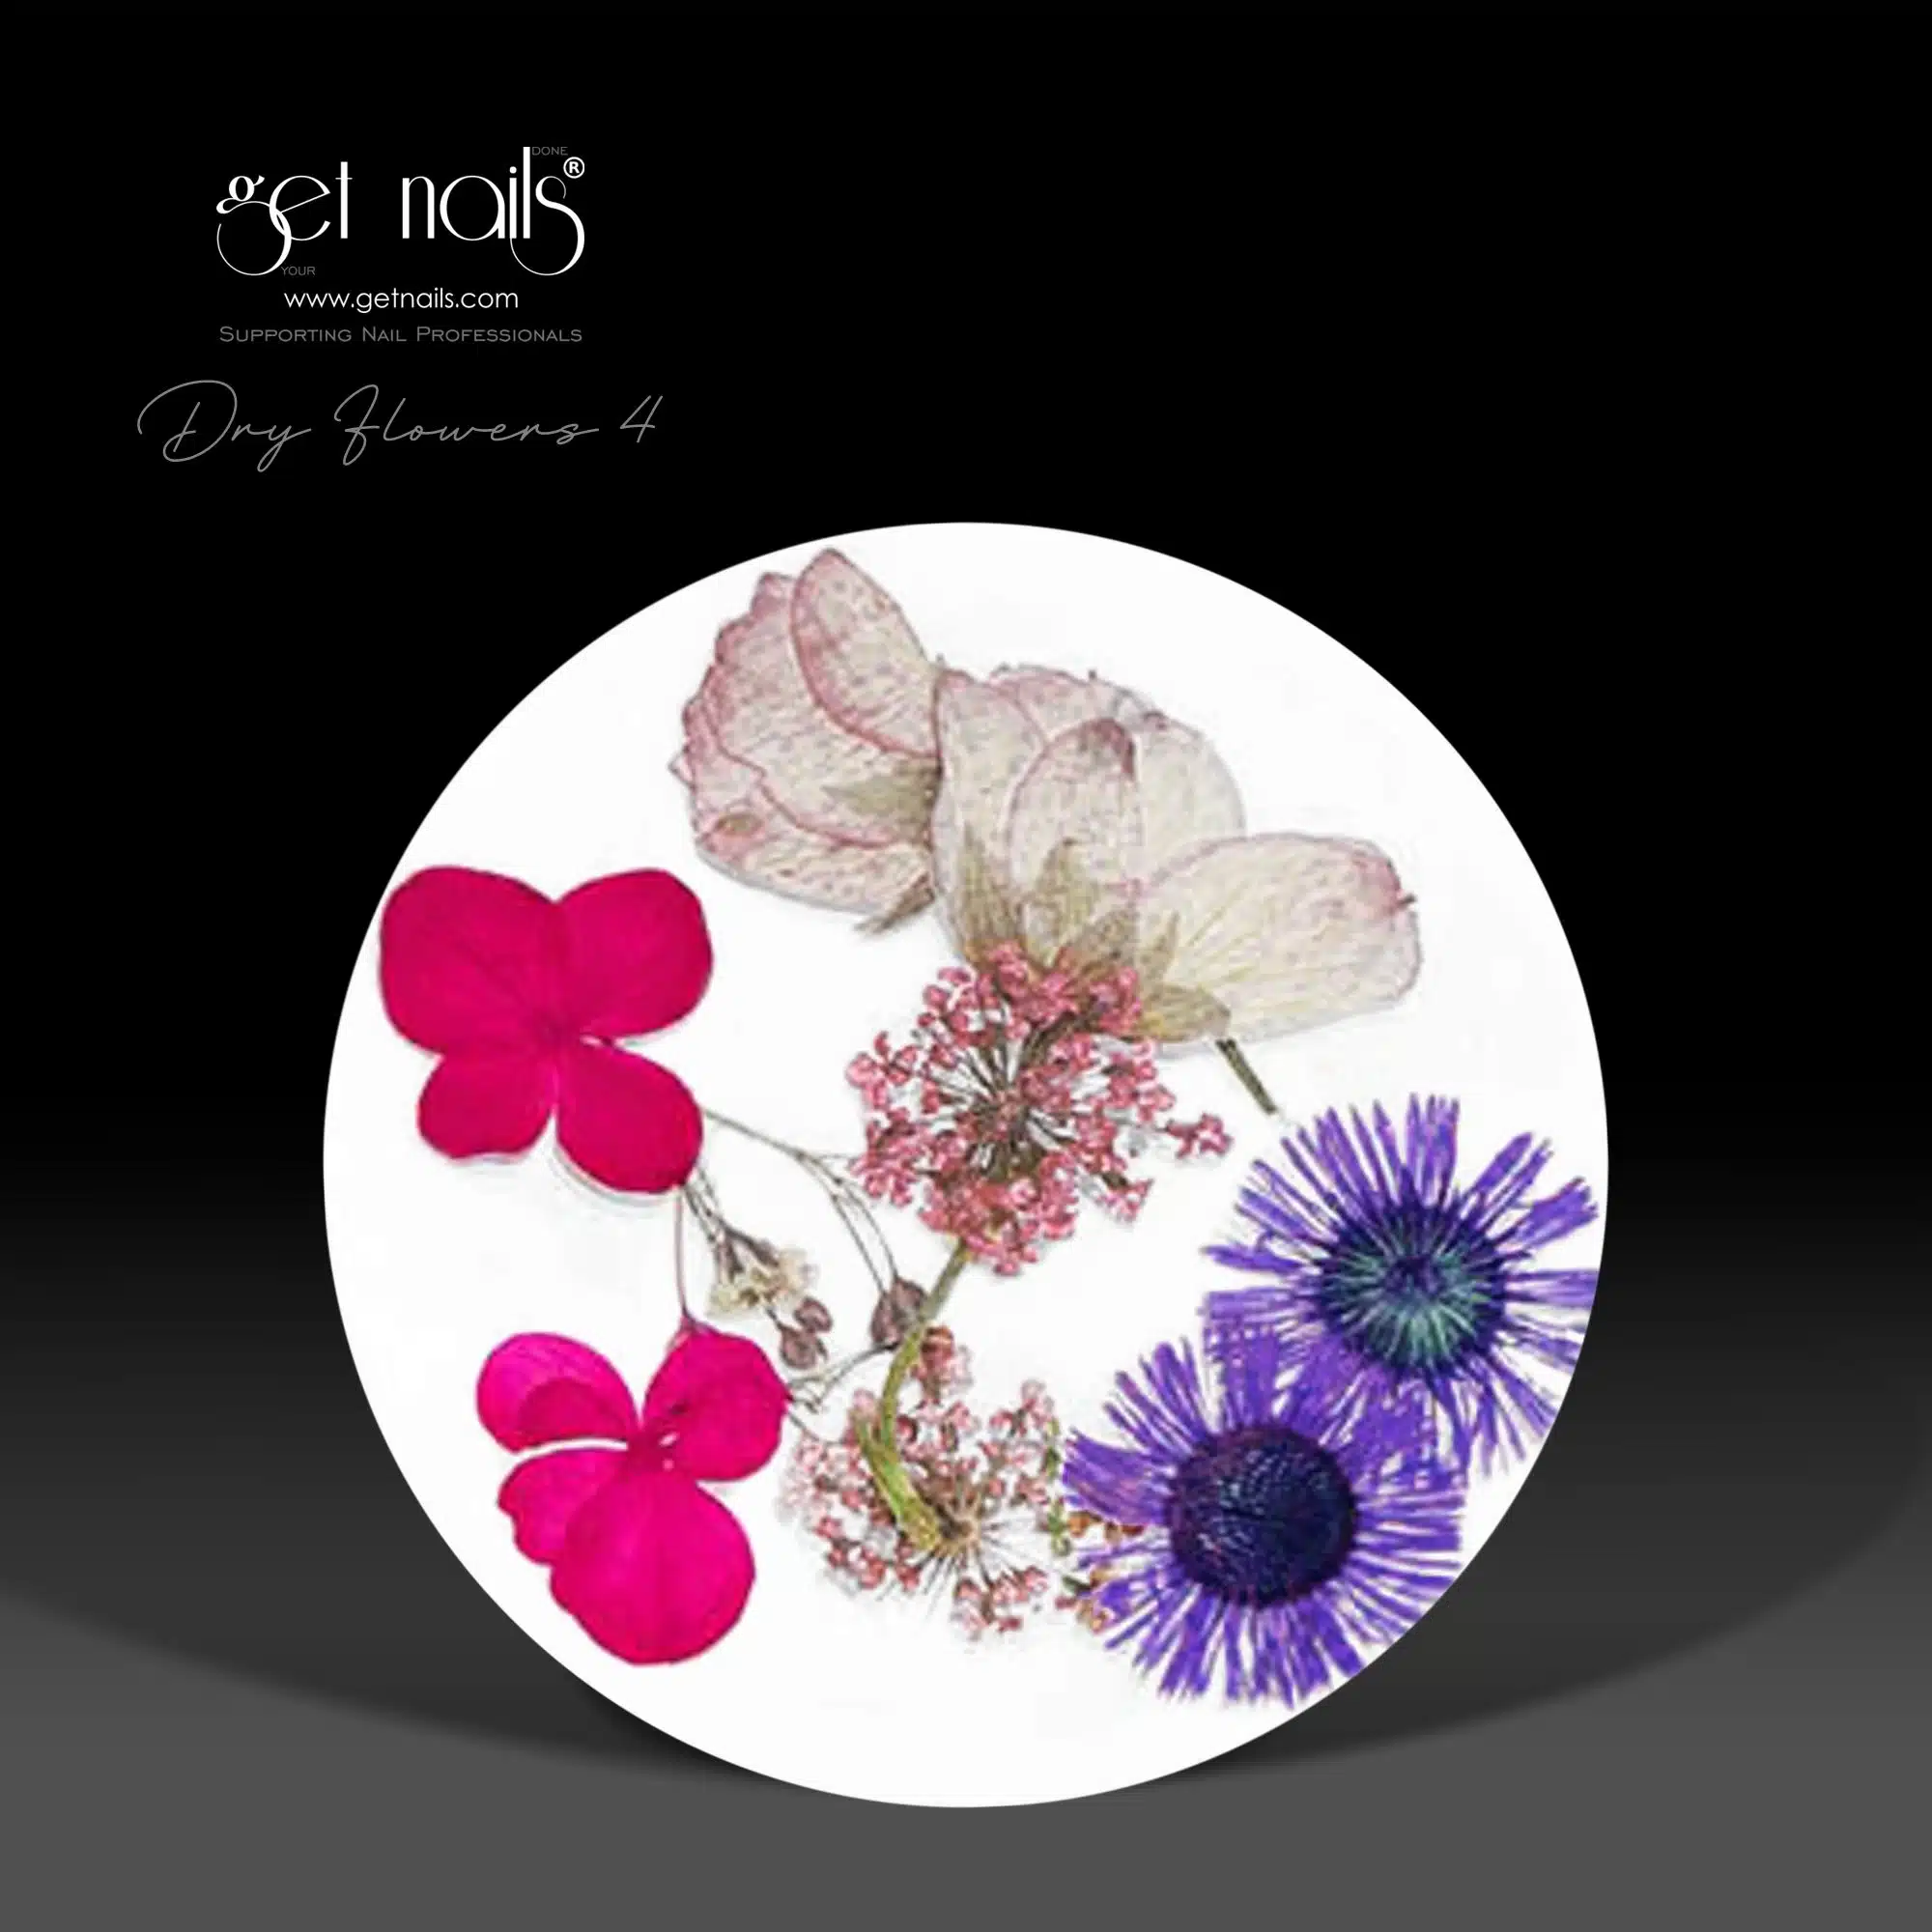 Get Nails Austria - Dry Flowers 4